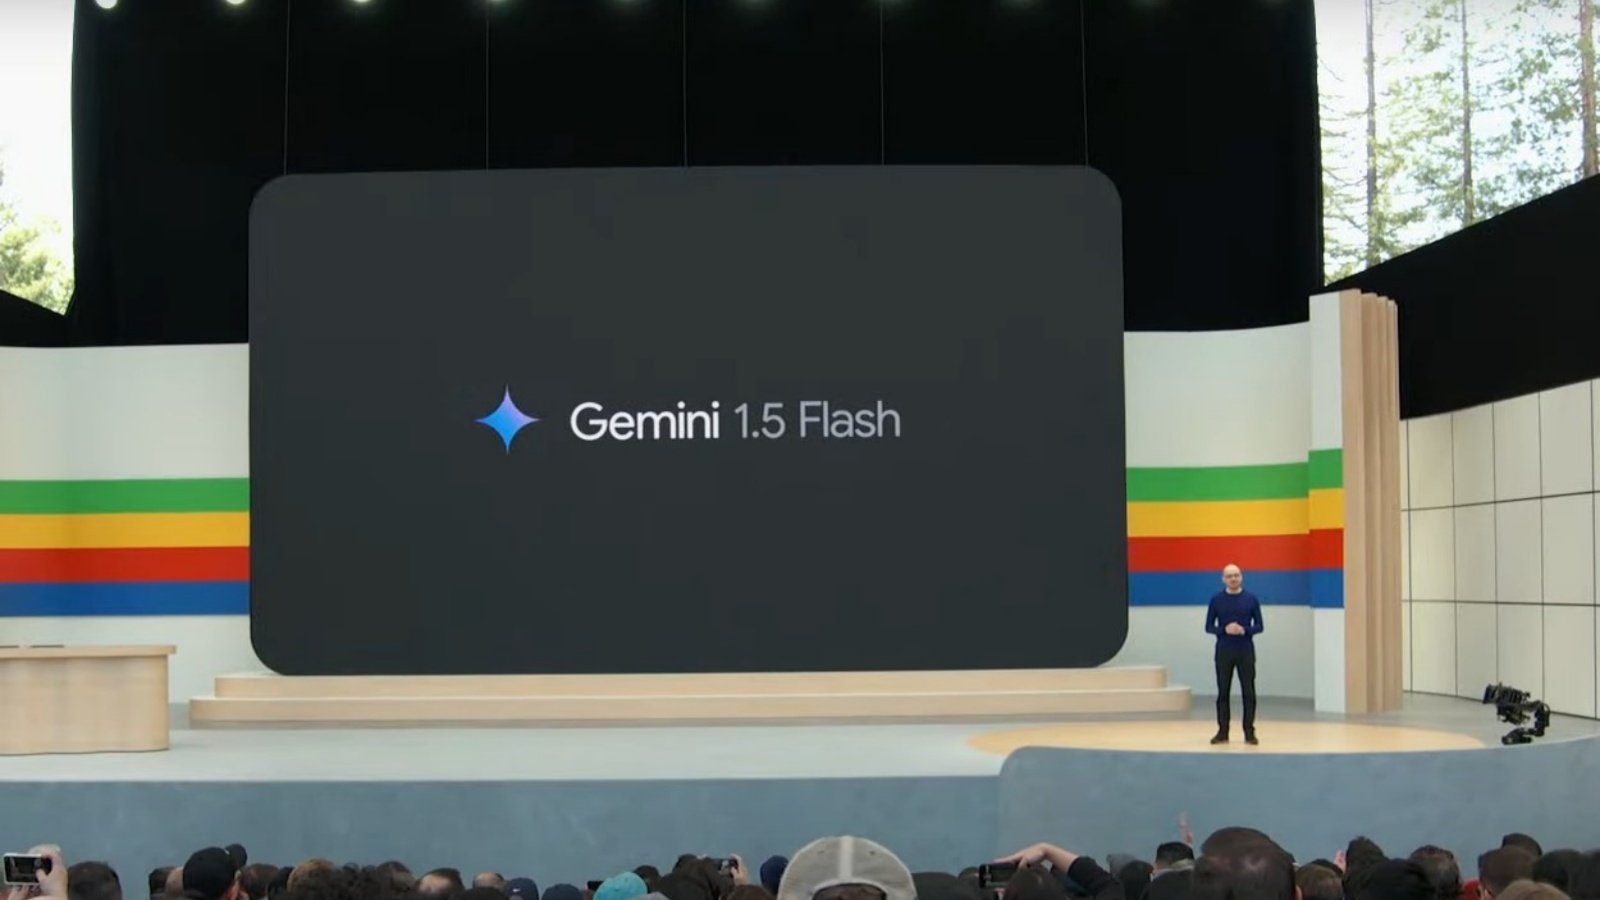 Google Introduces Gemini 1.5 Pro and New 'Flash' Model